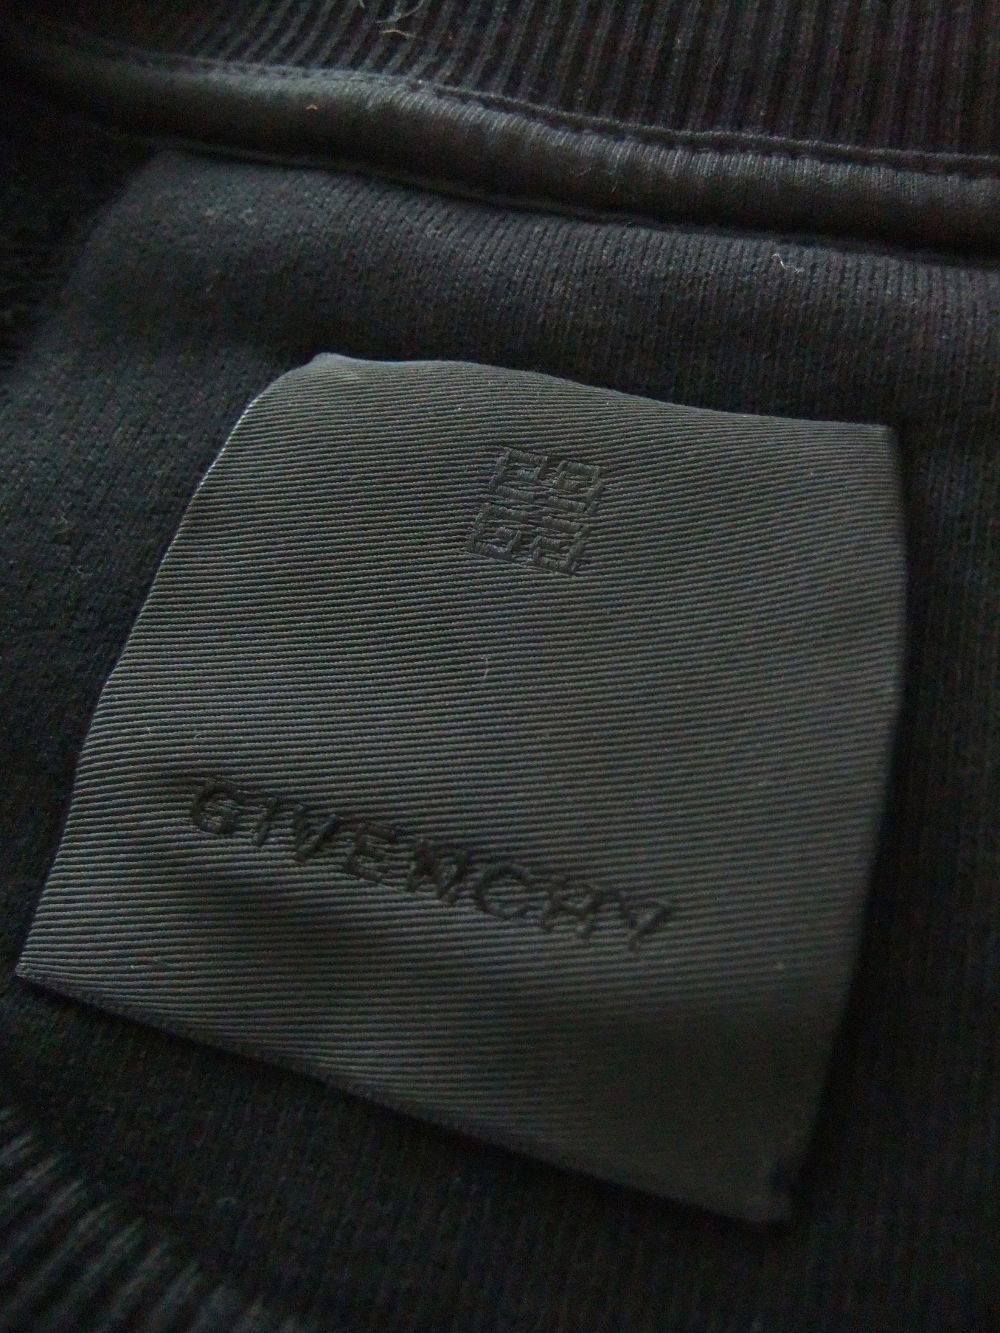 GIVENCHY - GIVENCHY ロゴ スリムフィット スウェットシャツ | 4.444glad